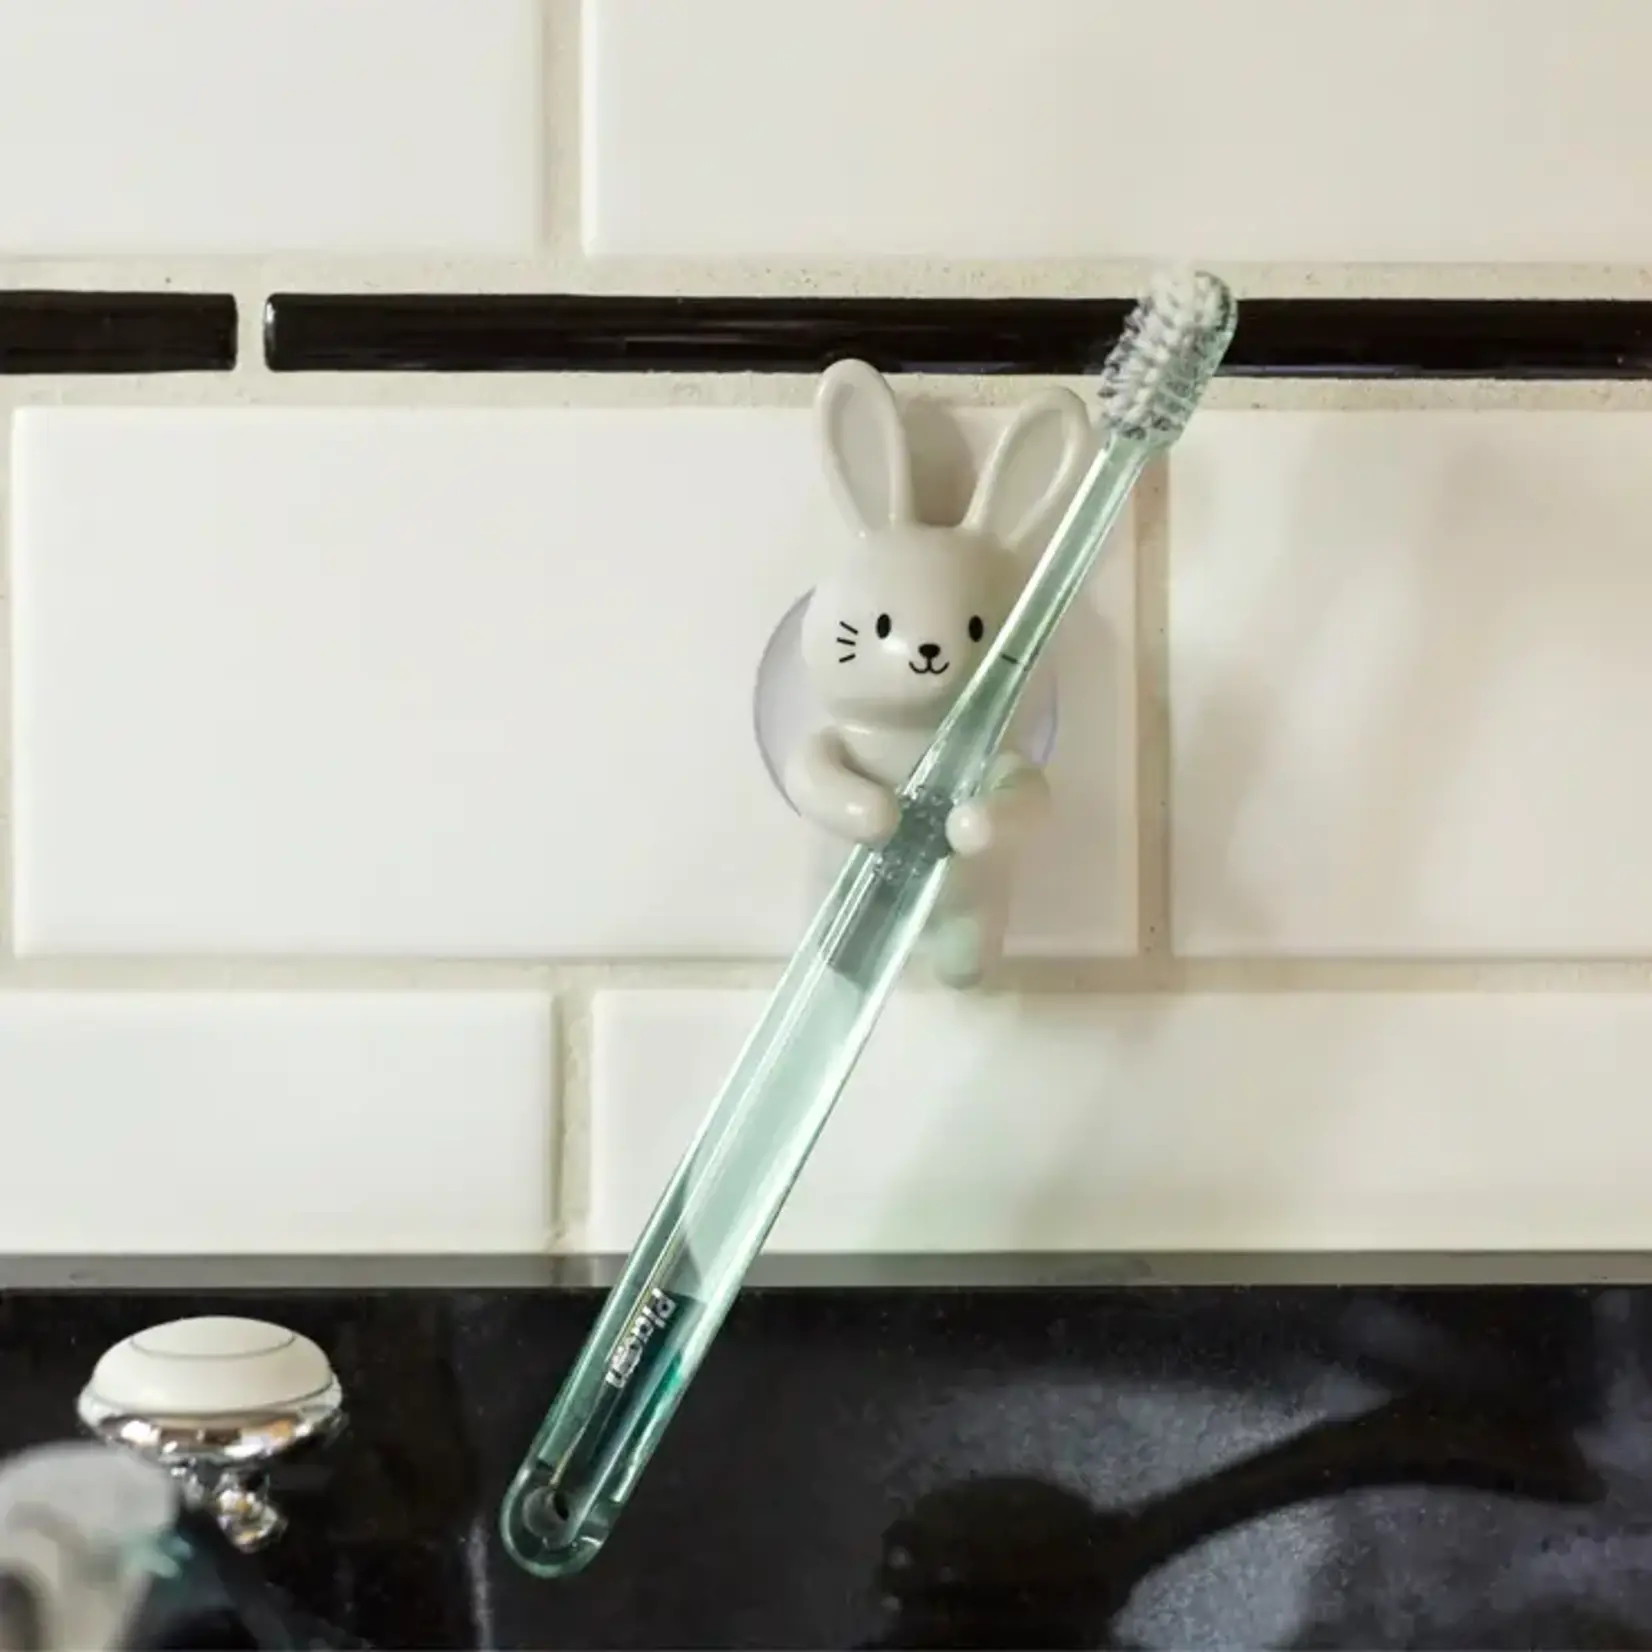 Toothbrush Holder - Rabbit HH55